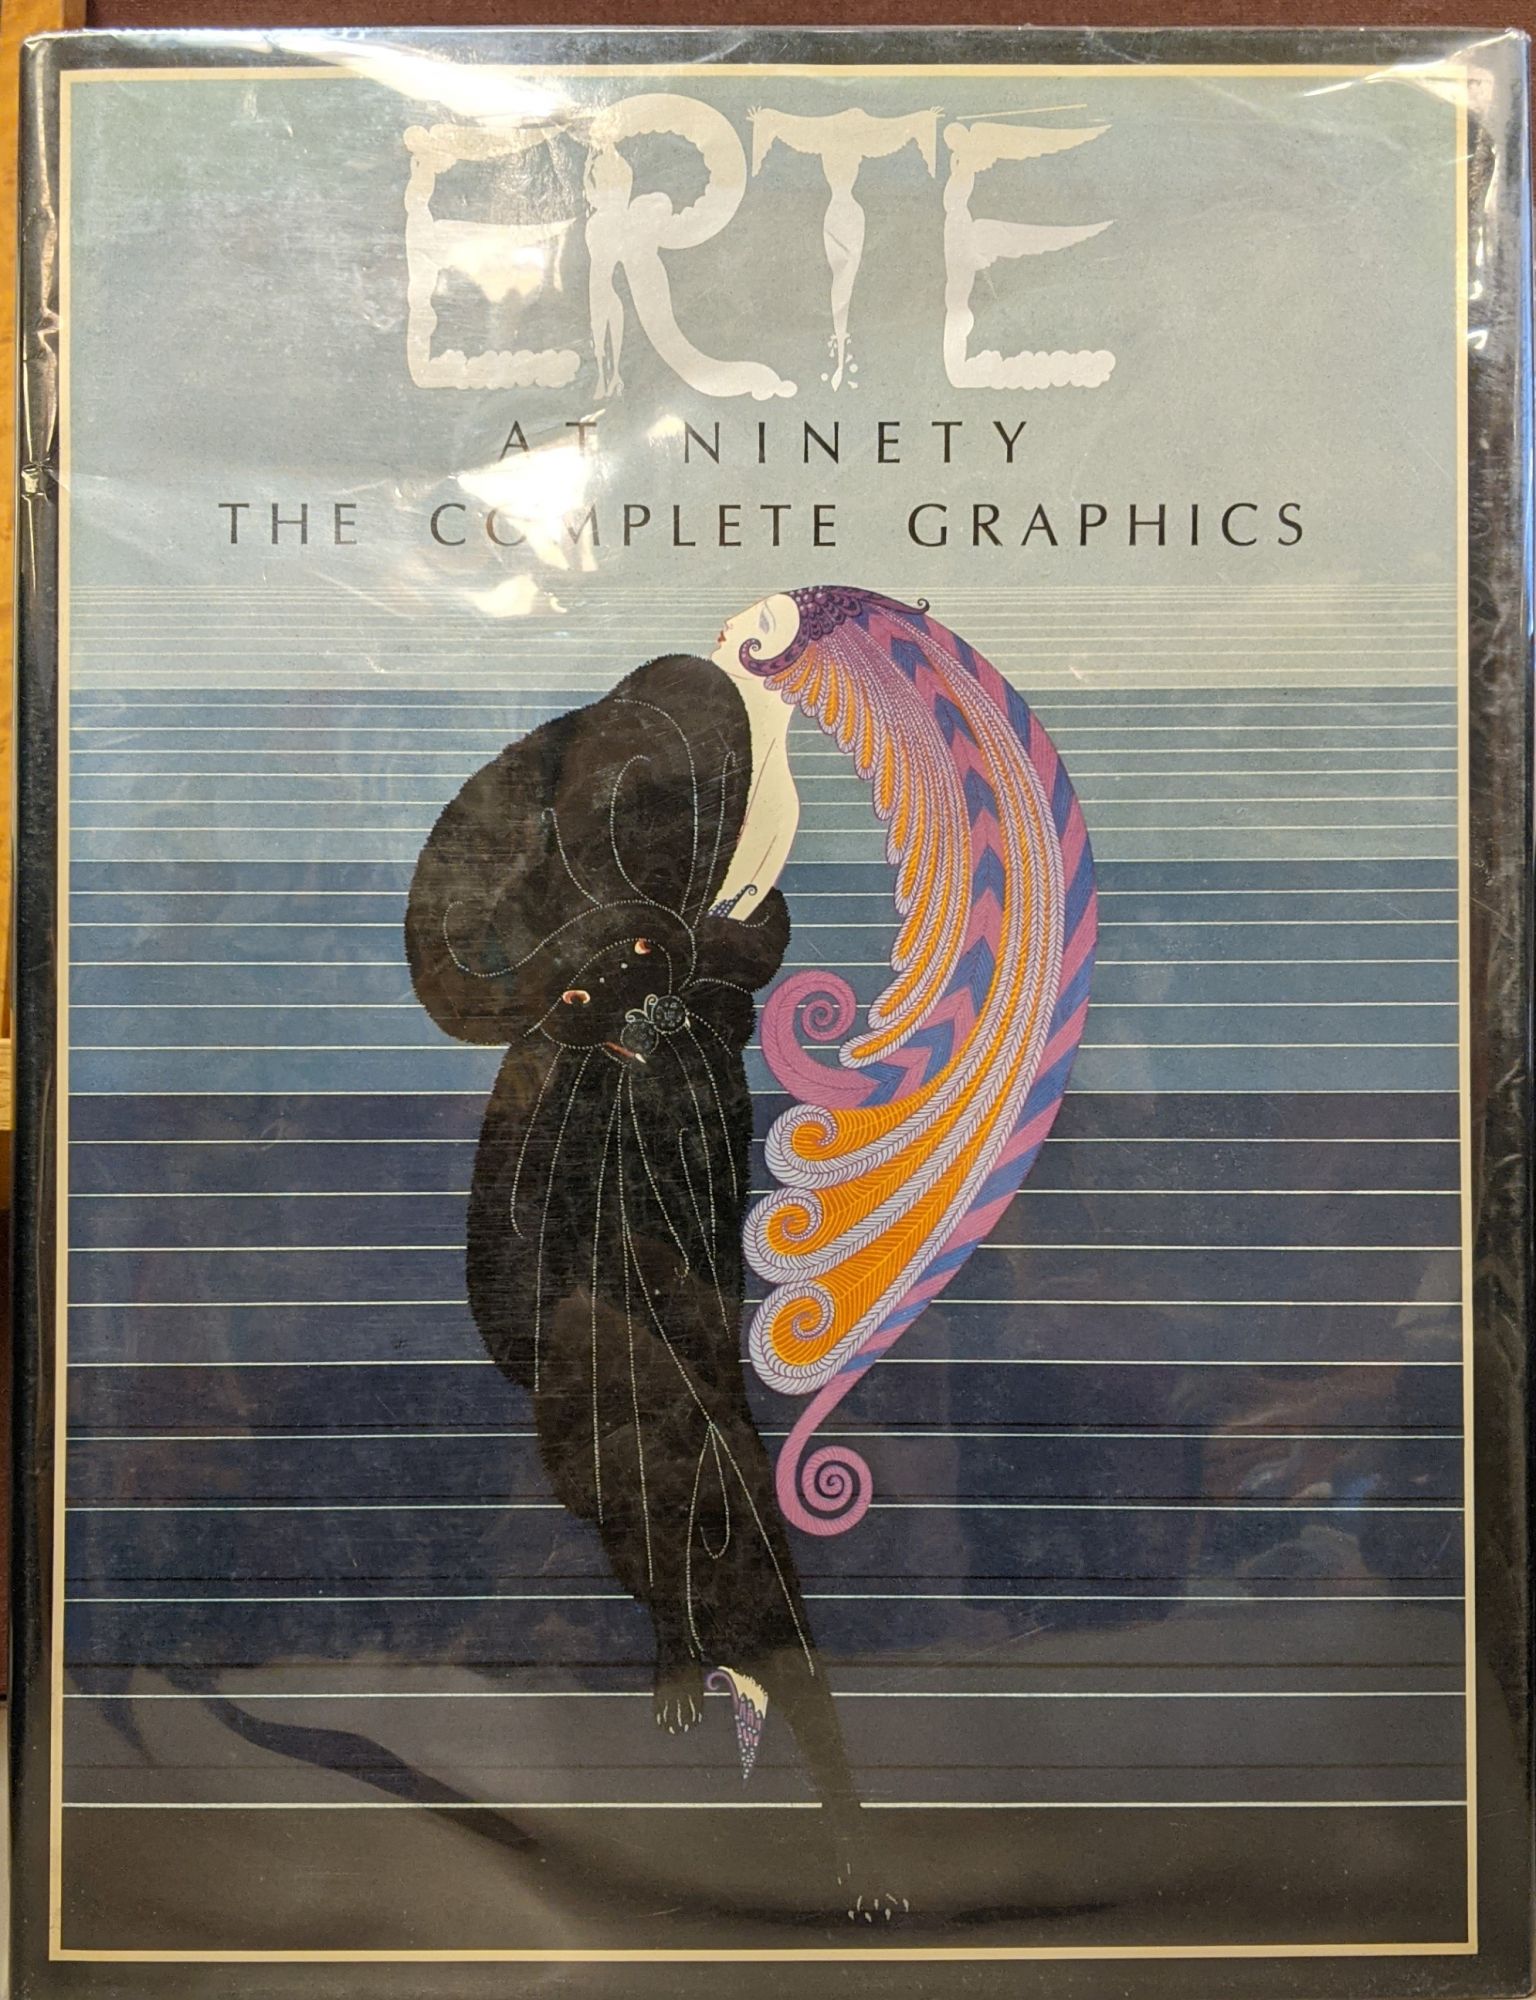 Erte at Ninety: The Complete Graphics by Erte, Marshall Lee on Moe's Books